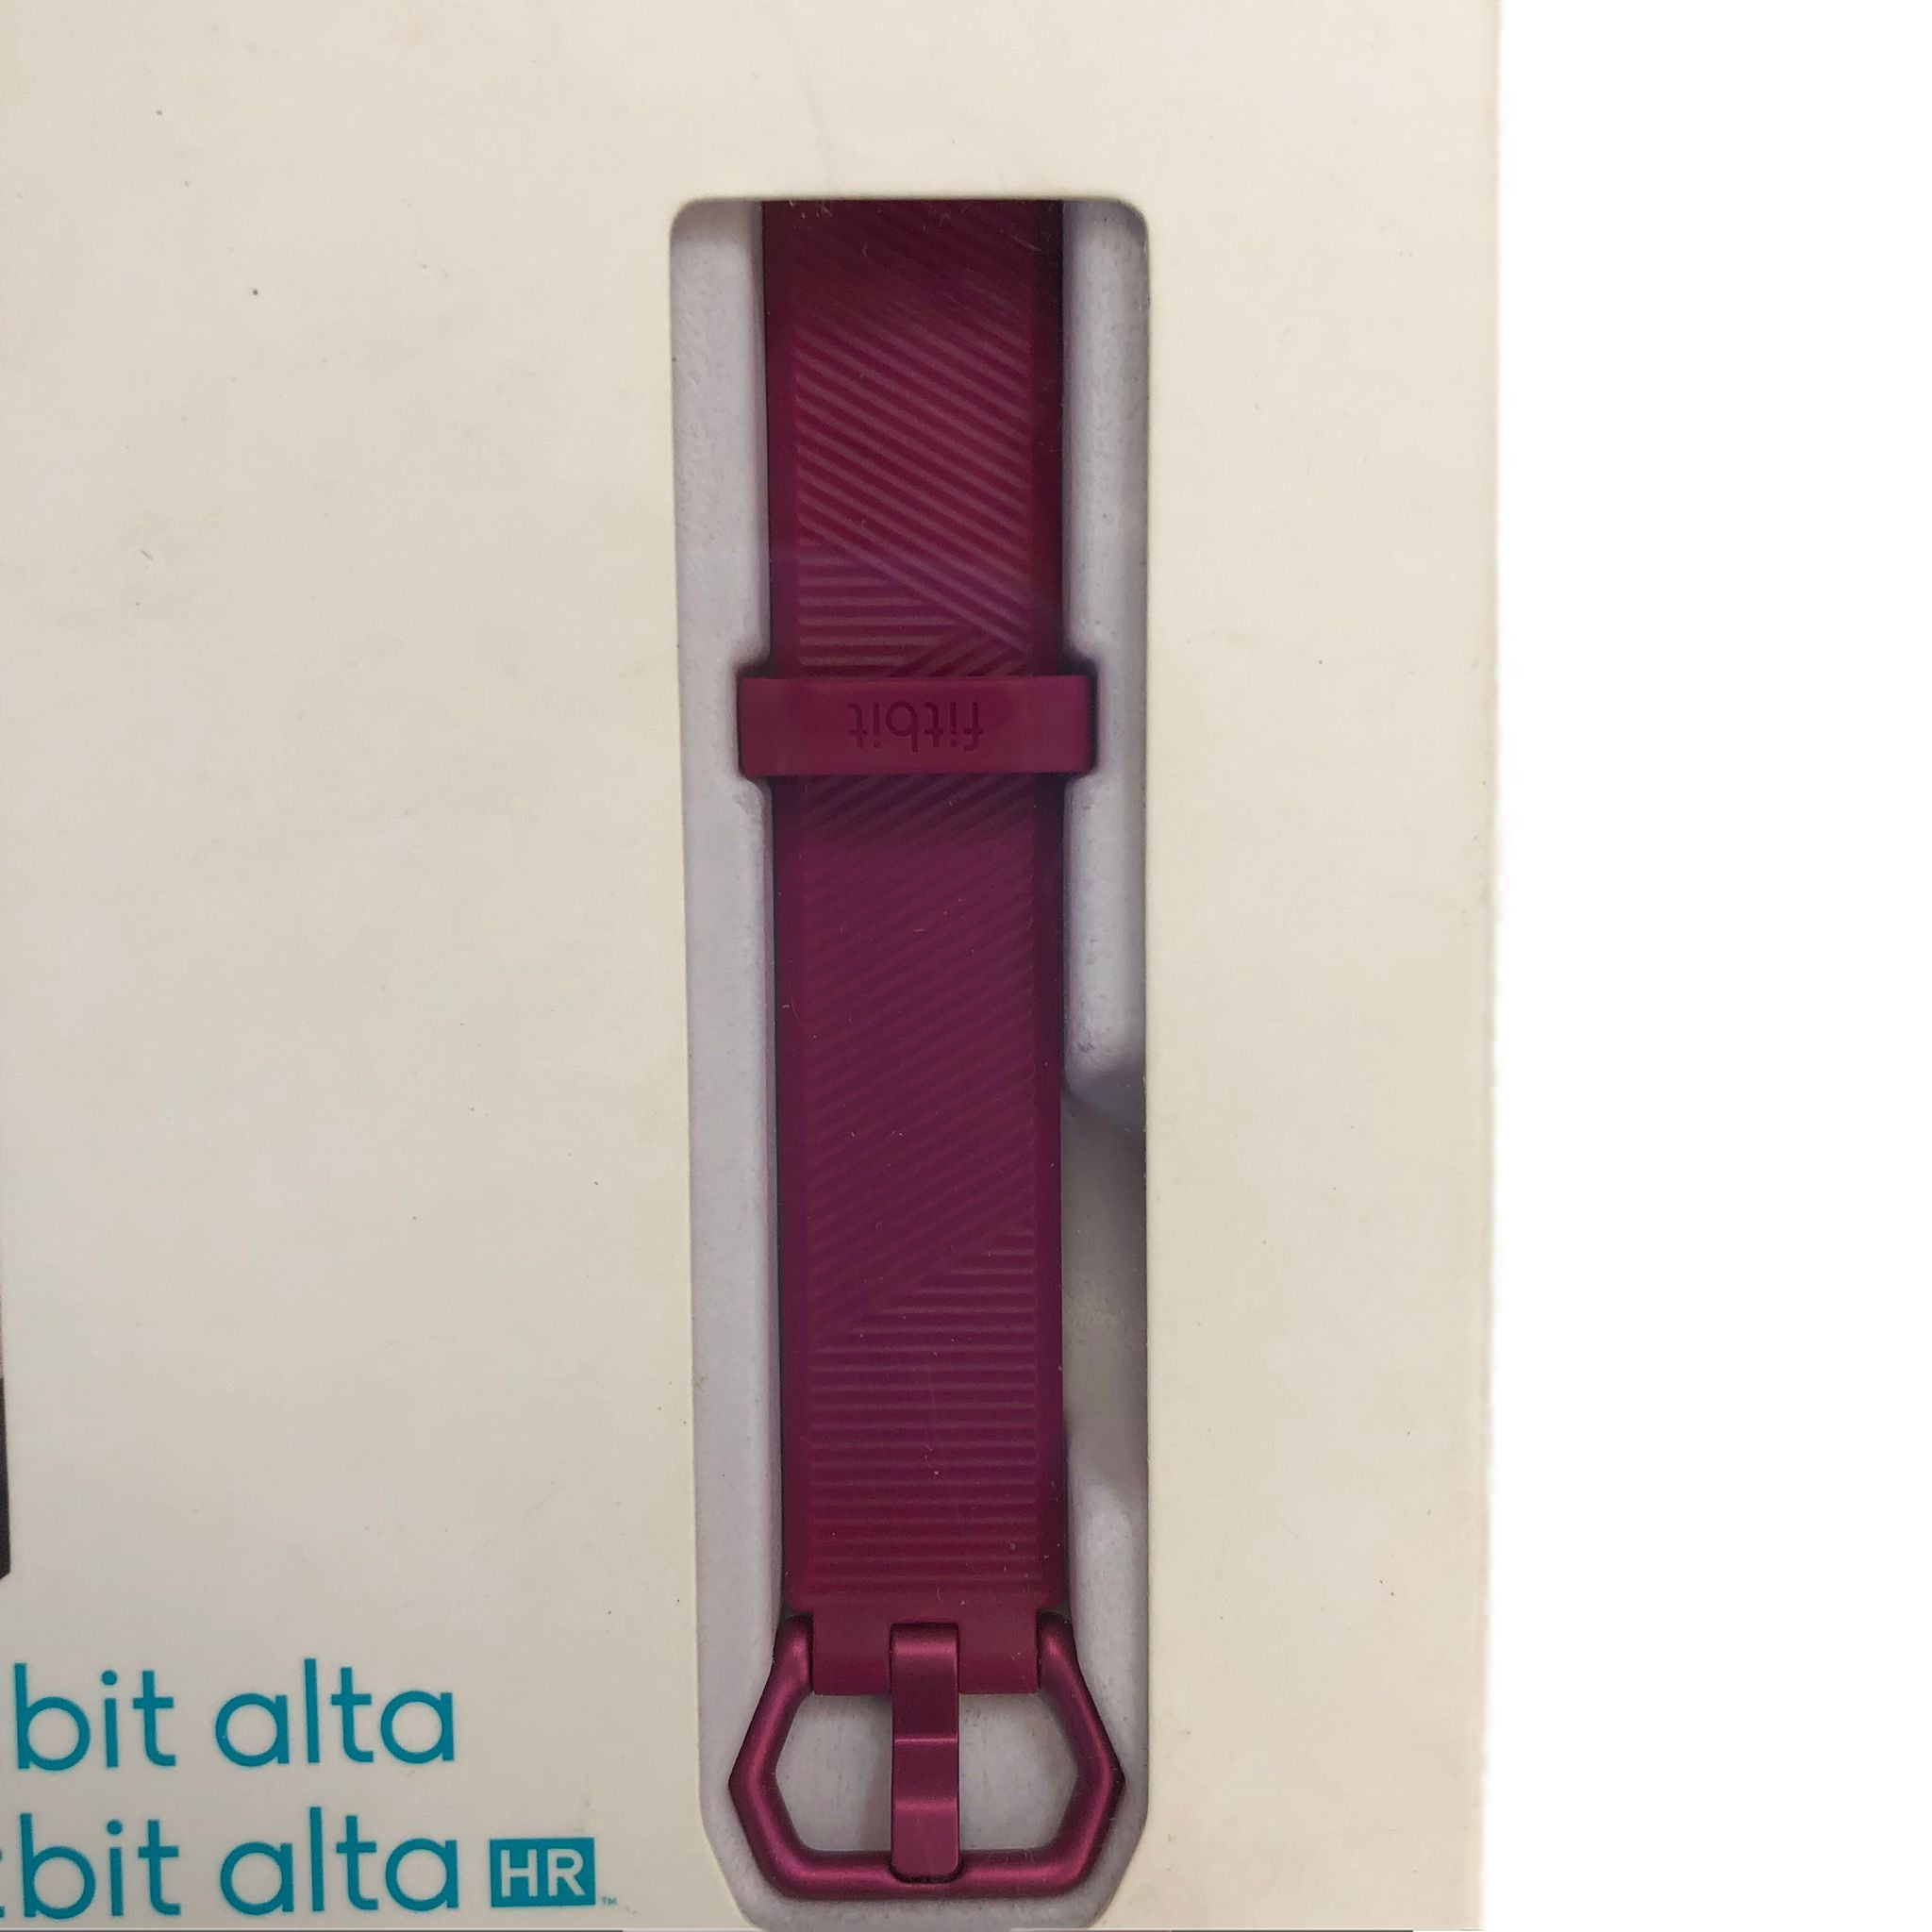 Fitbit Alta / Fitbit Alta HR Accessory Band